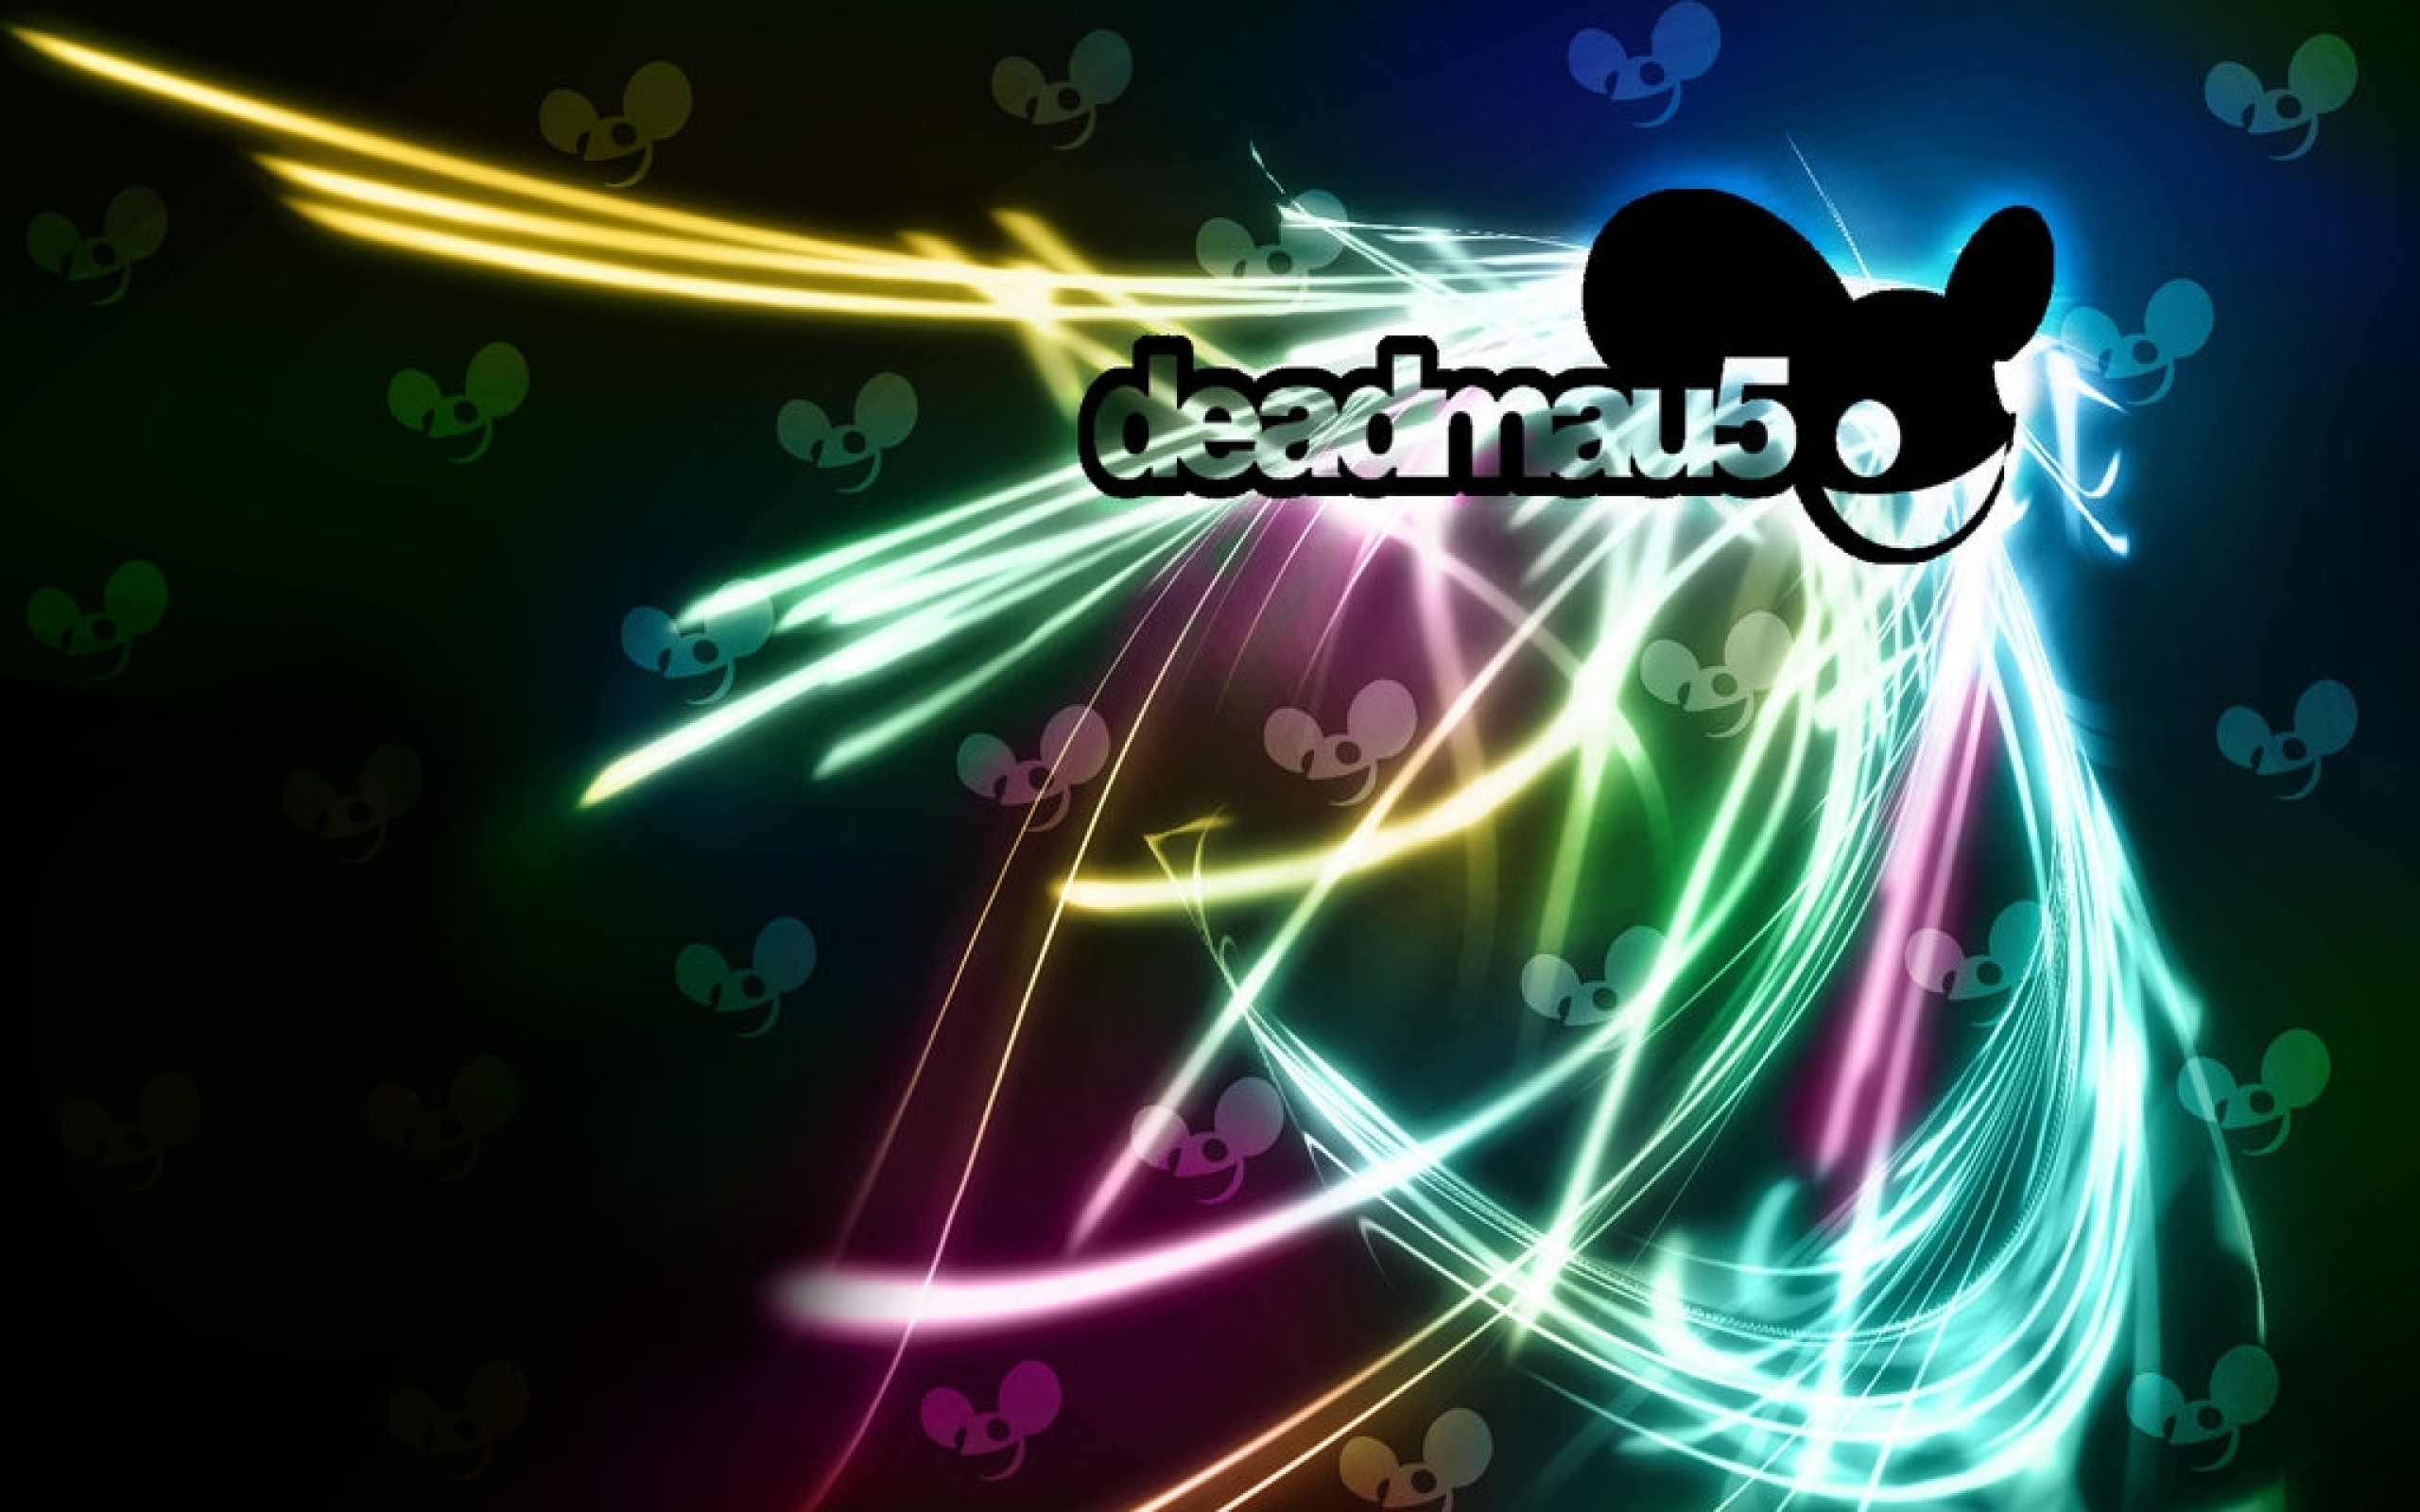 Wallpaper Deadmau5 Neon